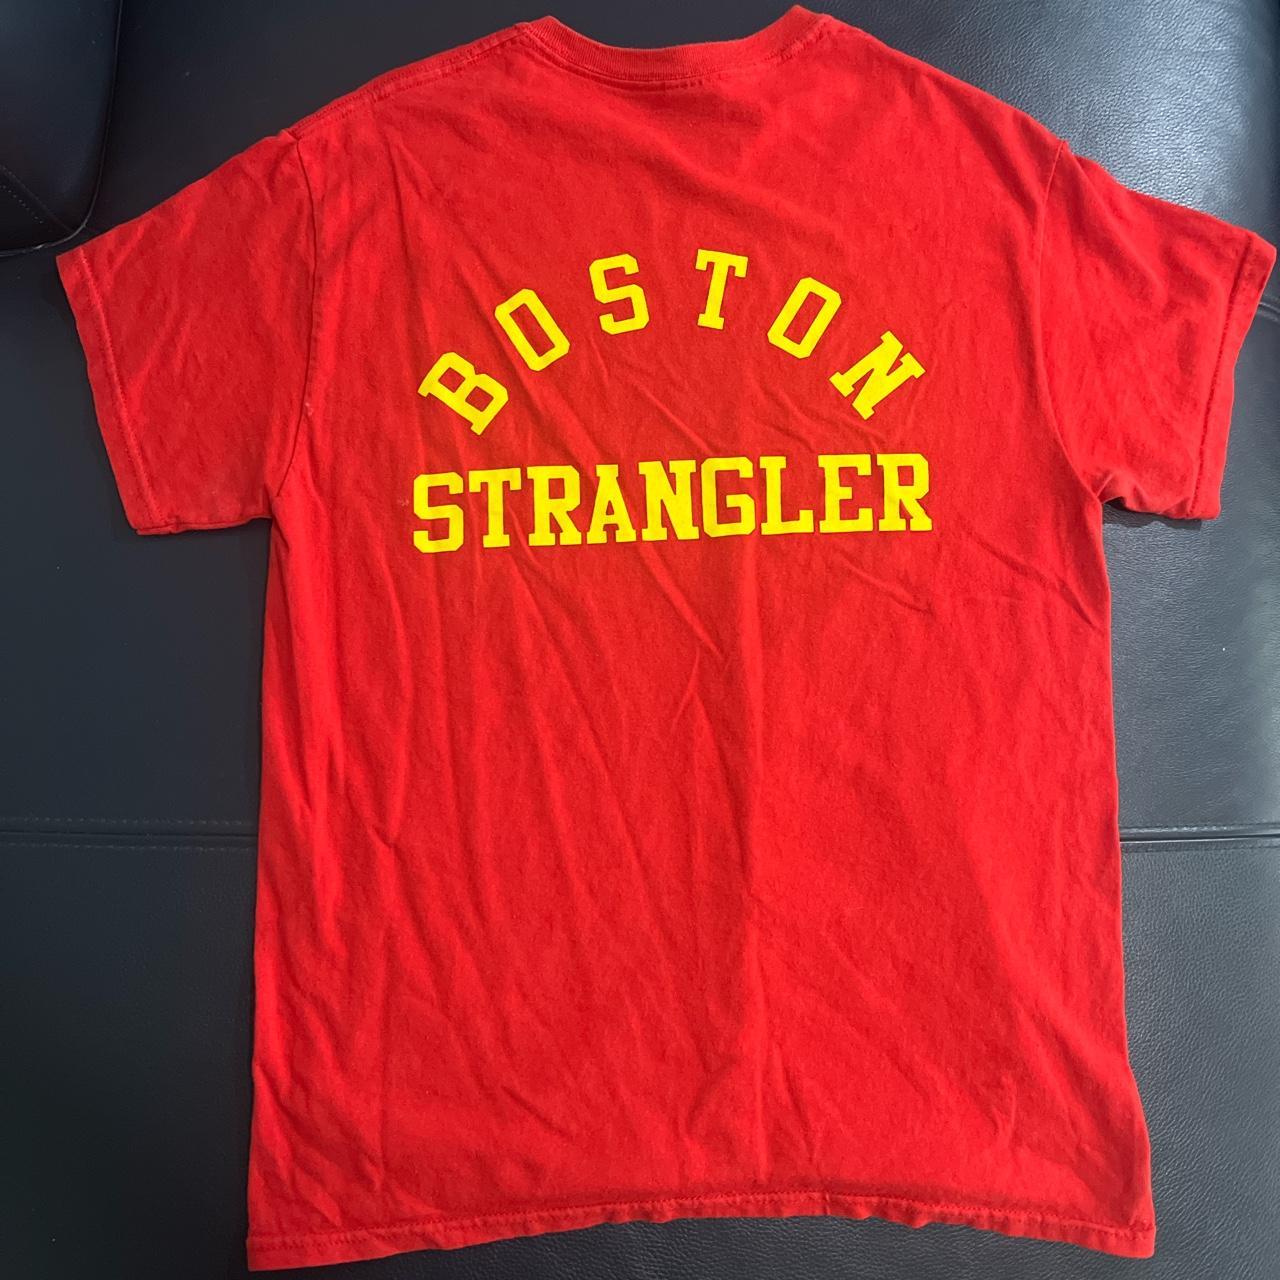 Hardcore band Boston Strangler